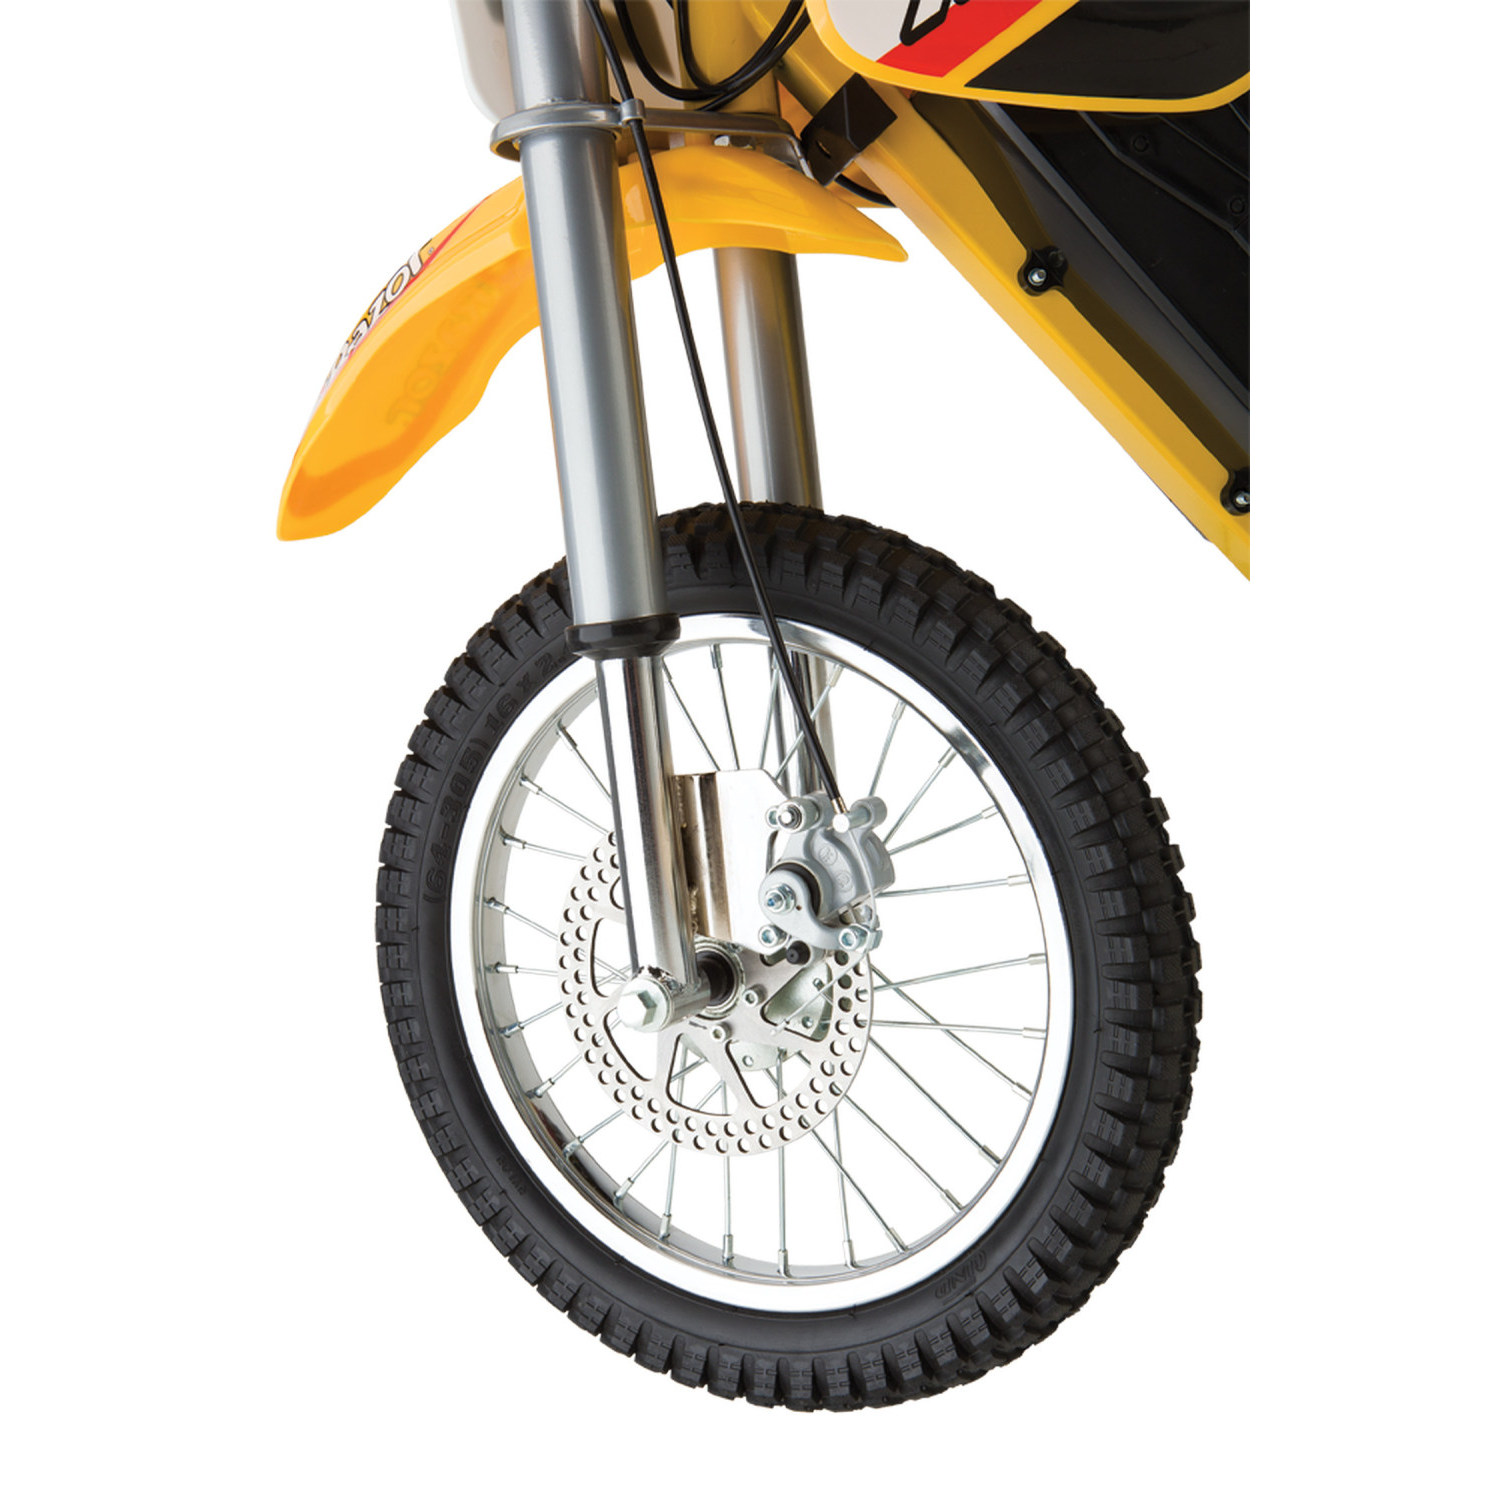 Электромотоцикл для детей RAZOR MX650 жёлтый с амортизаторами для бездорожья - фото 9